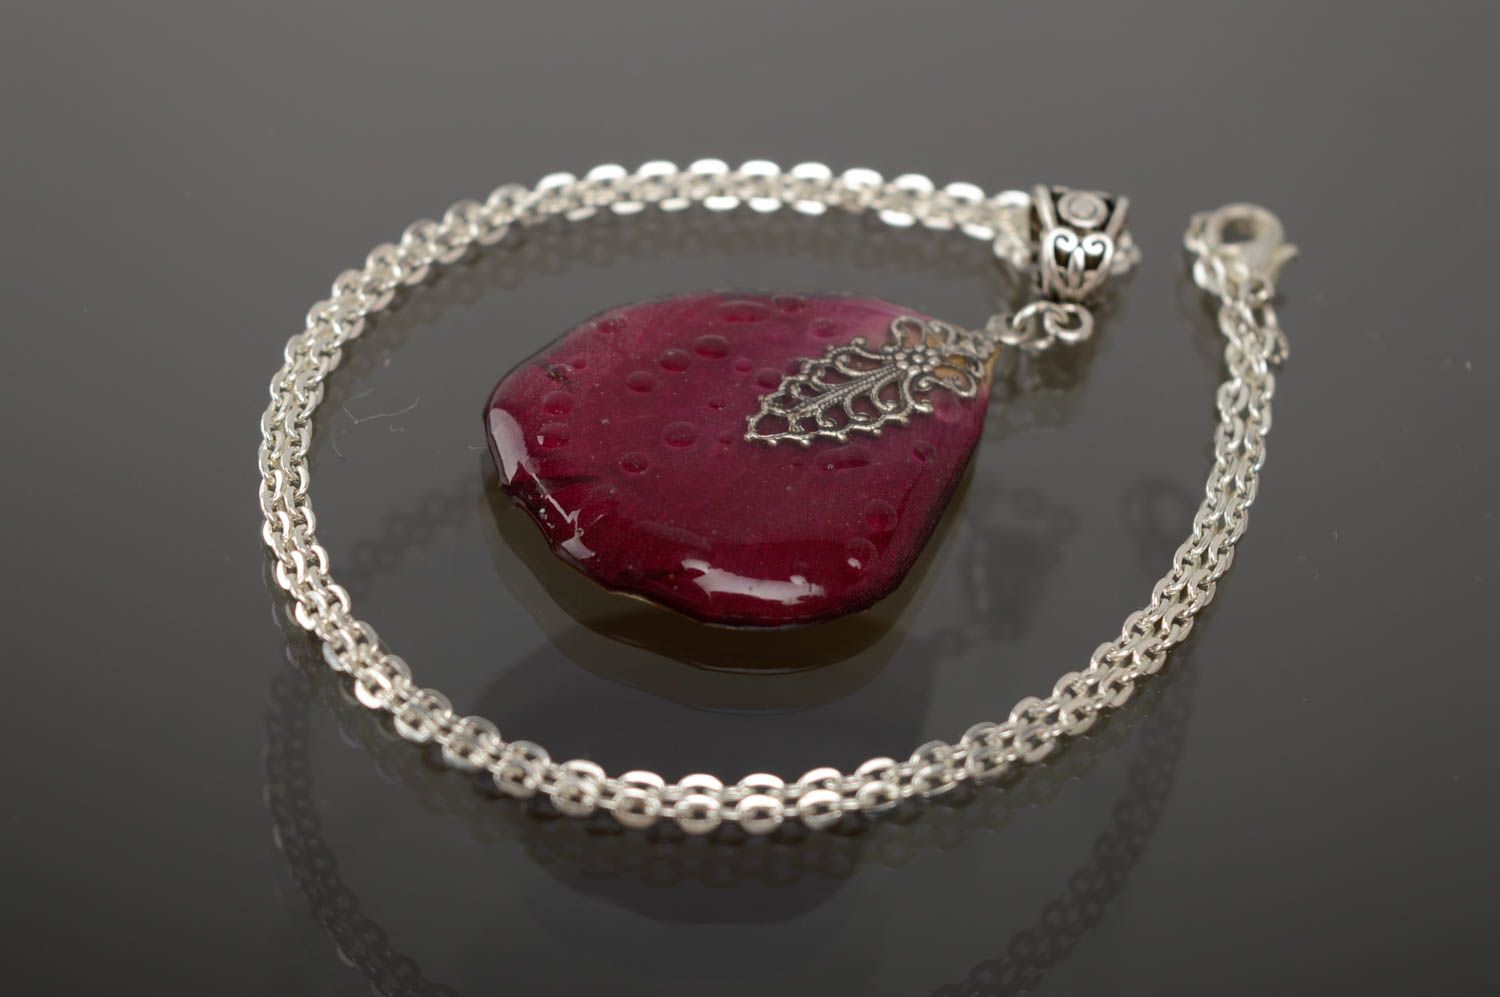 Neck pendant with rose petal coated with epoxy photo 1